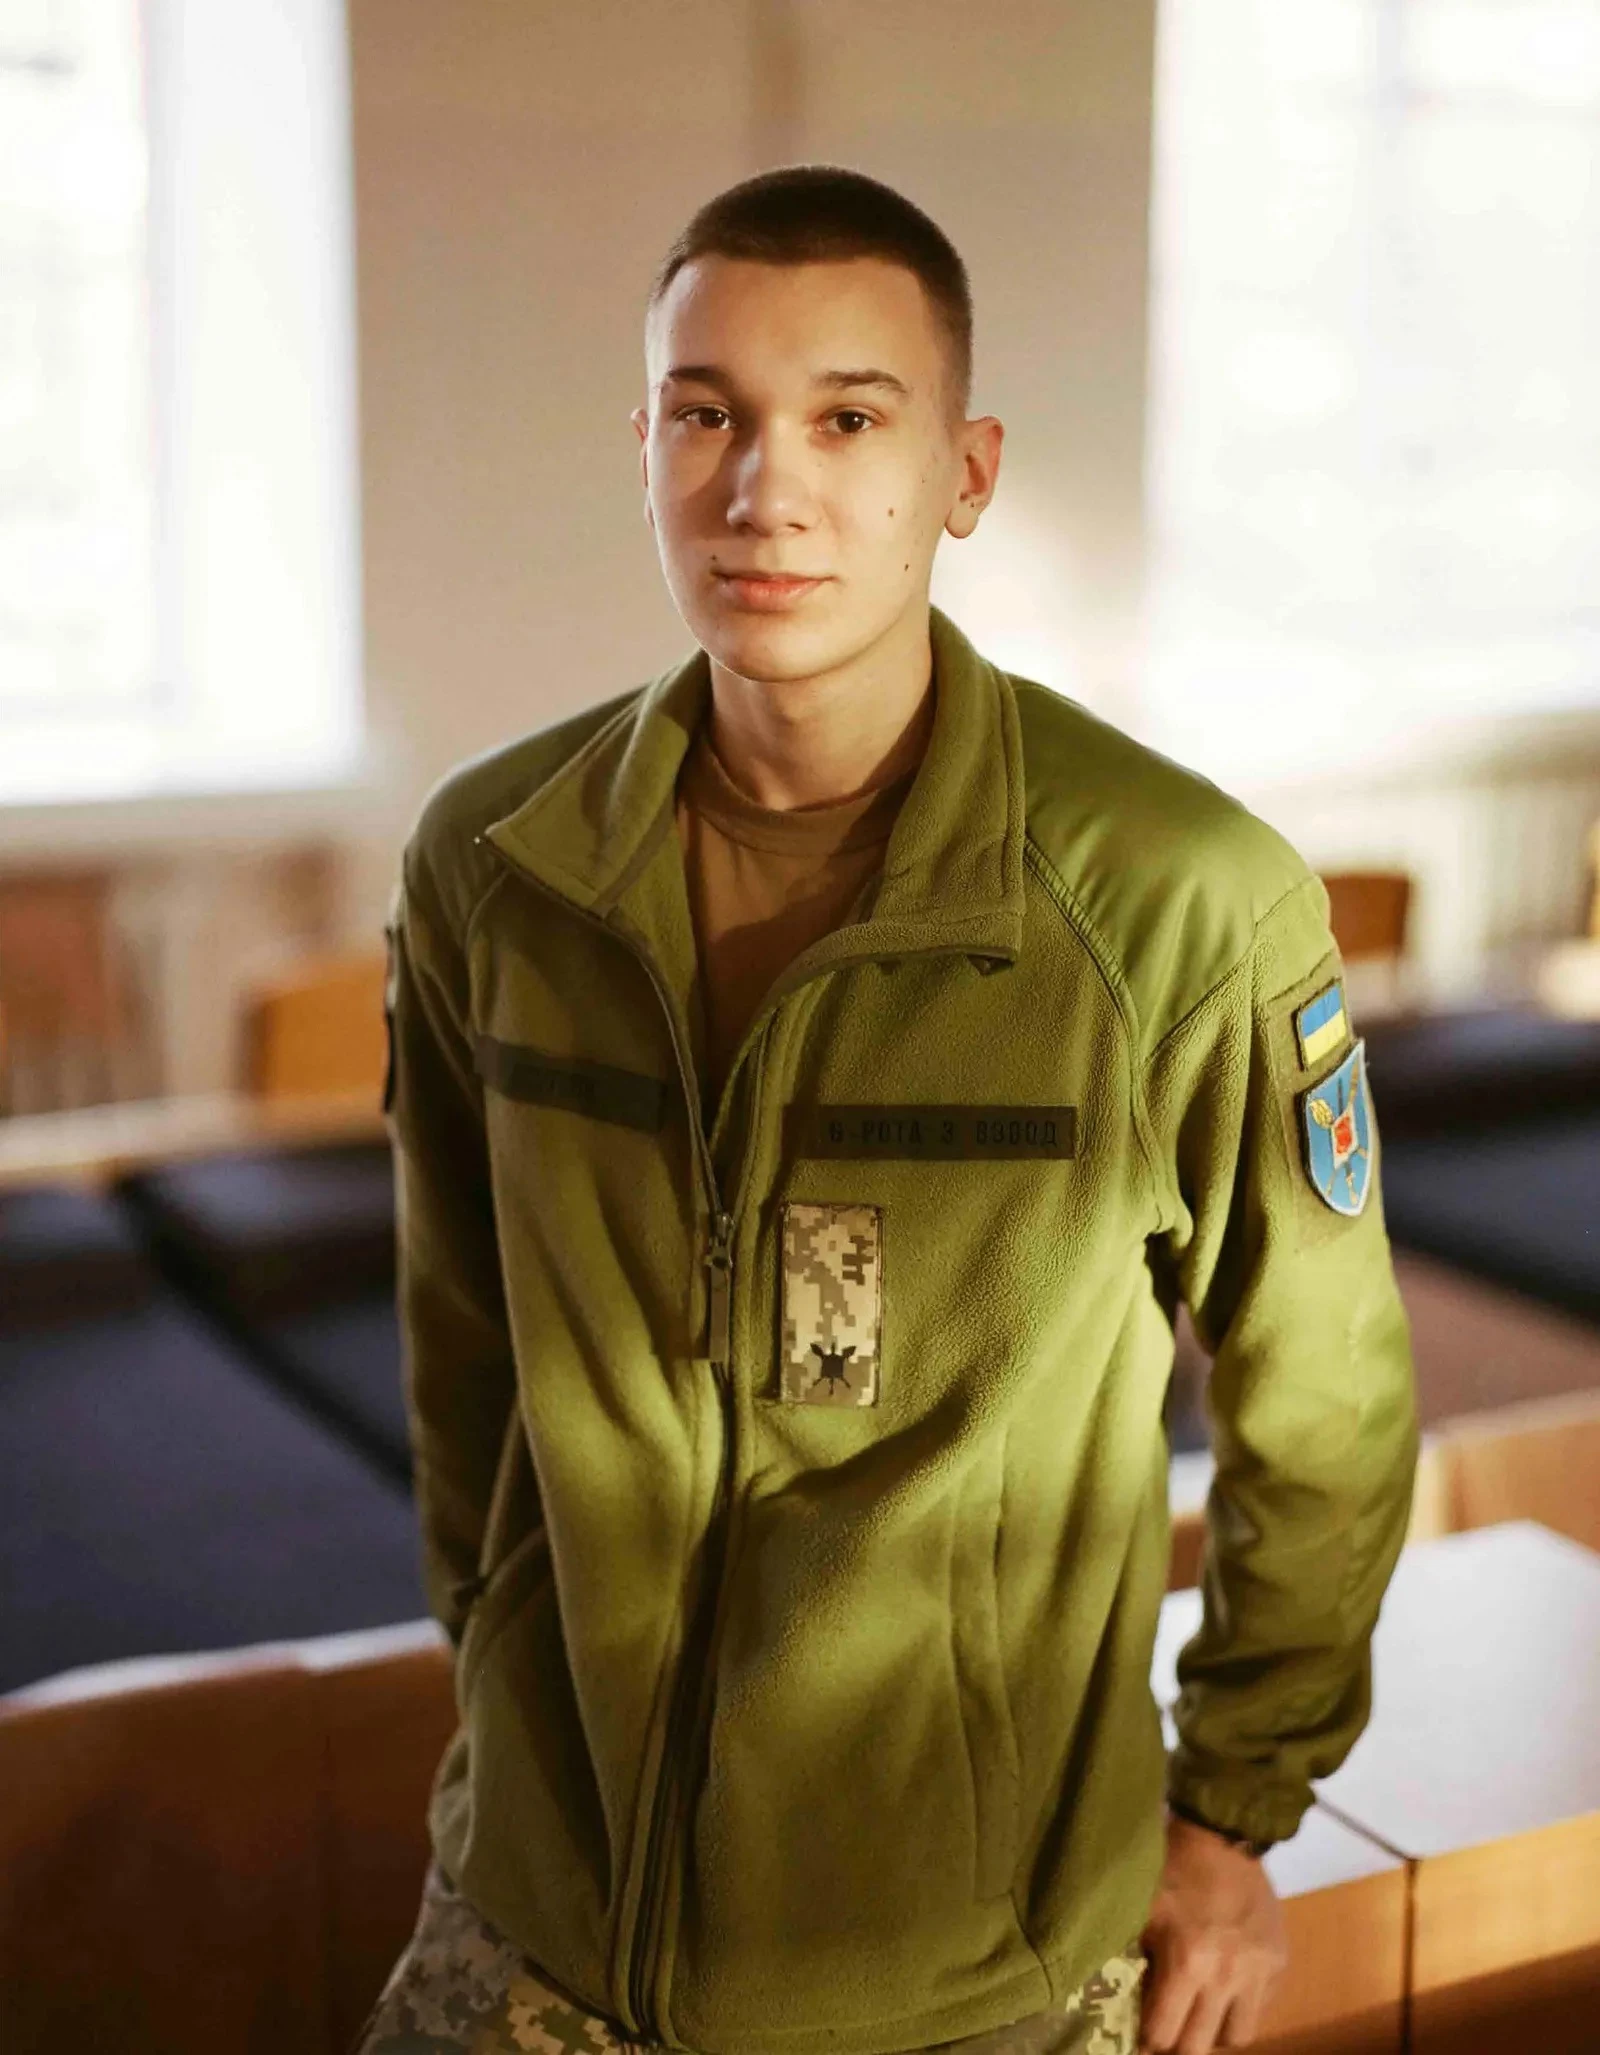 Сadet of the Ivan Bohun Military High School